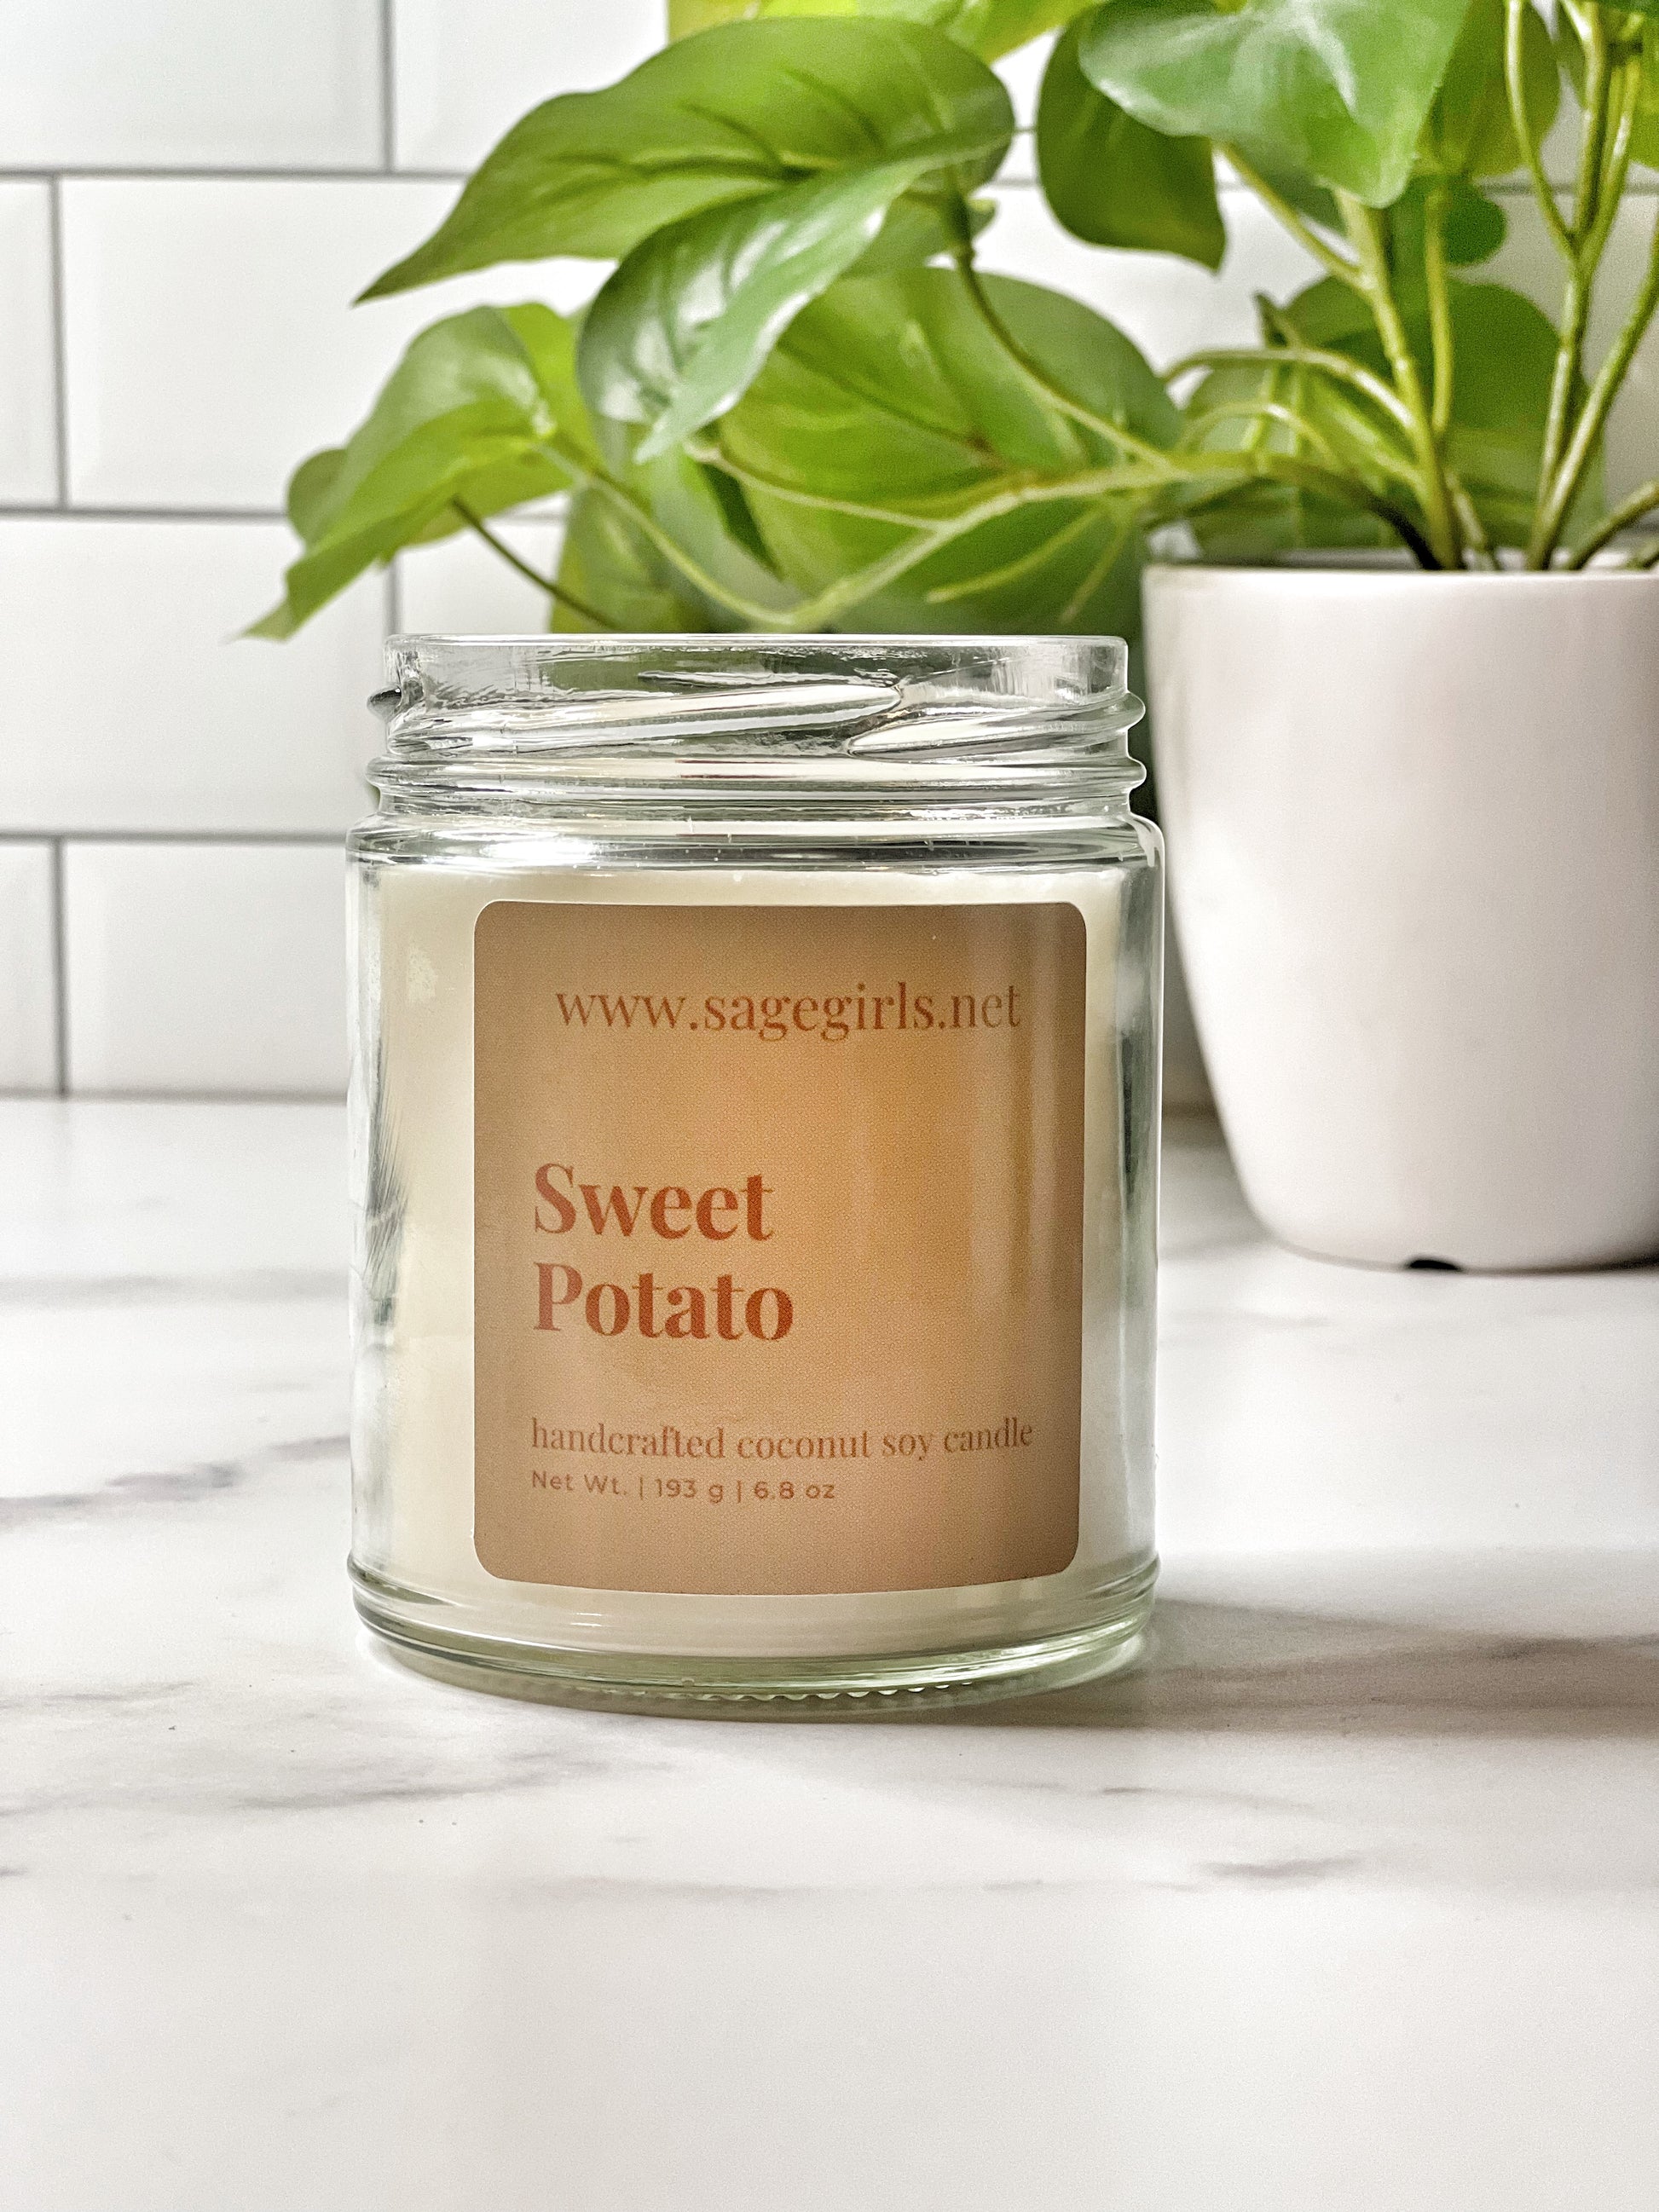 Sweet Potato | 6.8oz S.A.G.E. Fundraiser Candle - Mind Body & Scents, LLC